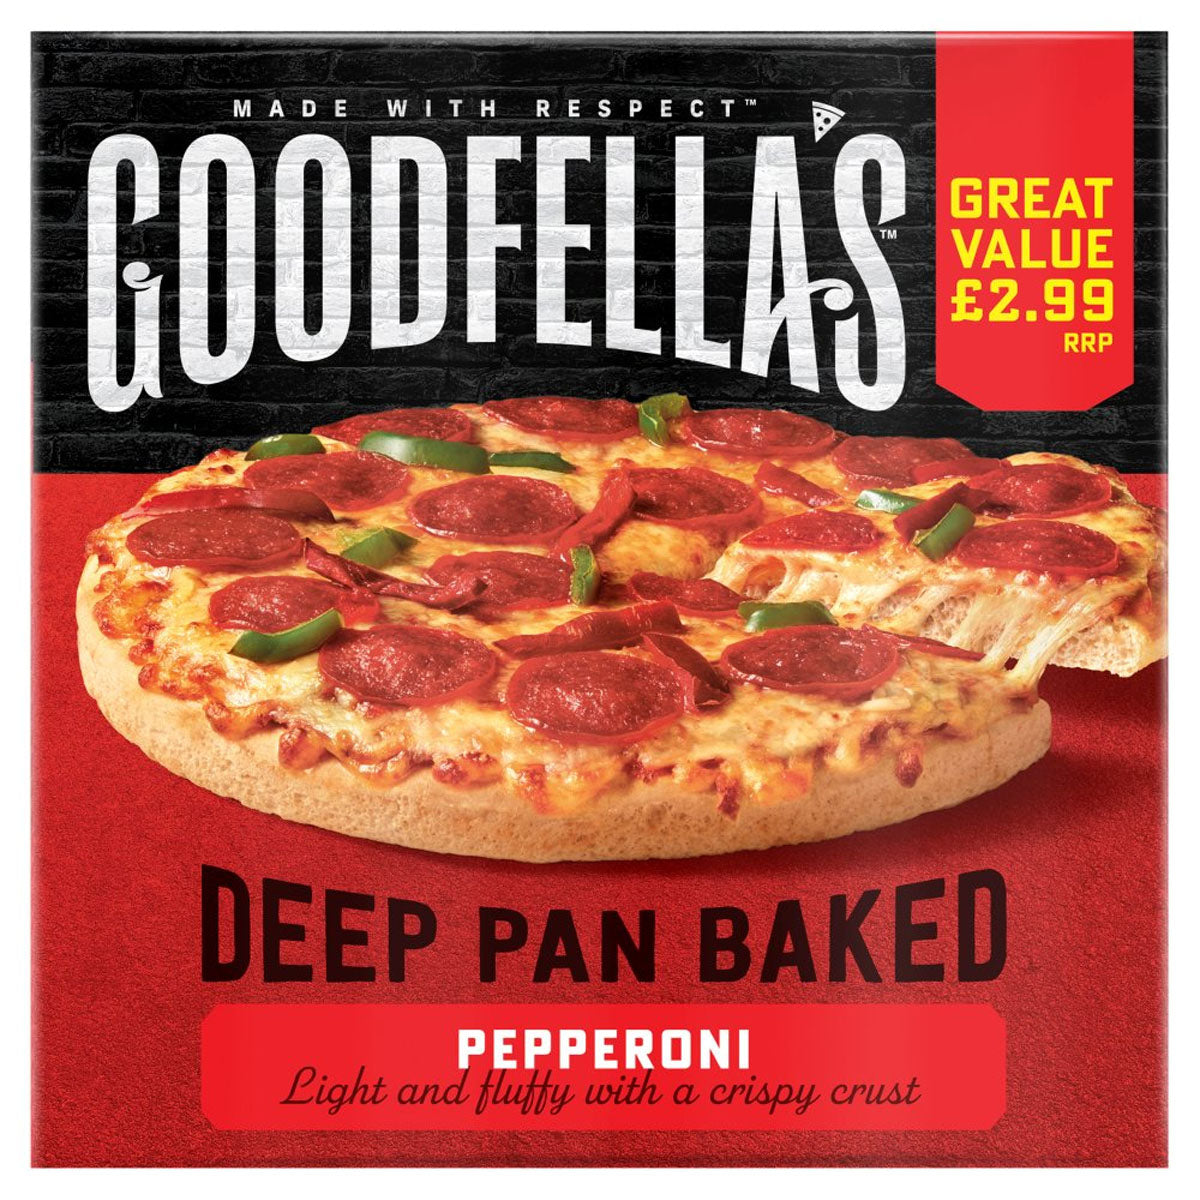 Goodfellas - Deep Pan Baked Pepperoni - 411g deep pan baked pepperoni pizza.